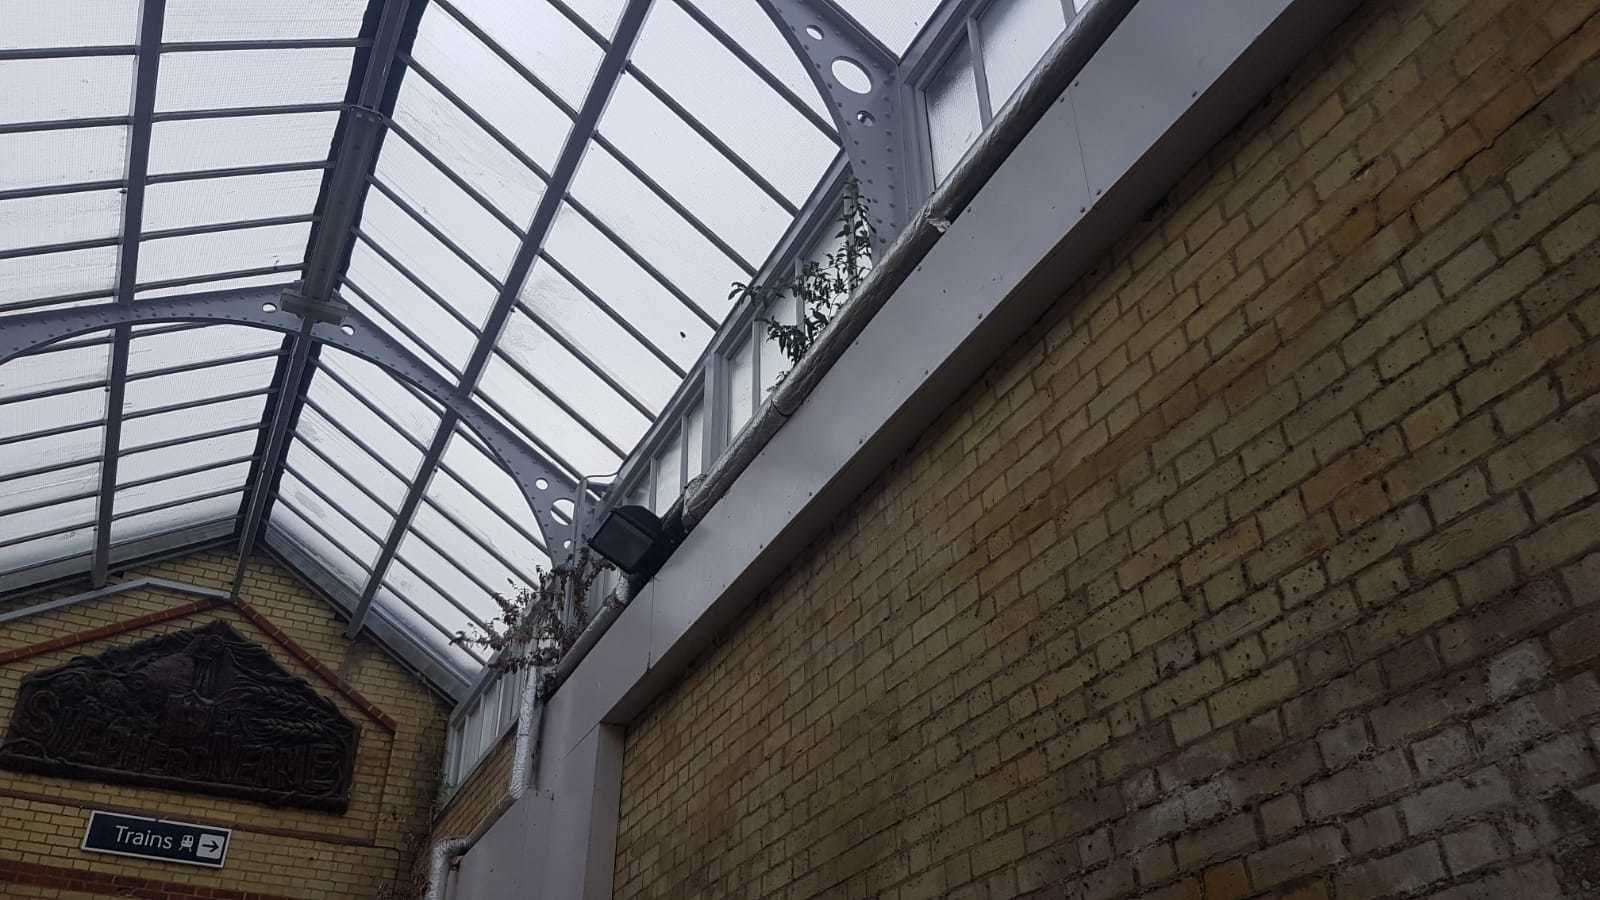 Evidence of the deterioration of Faversham train station